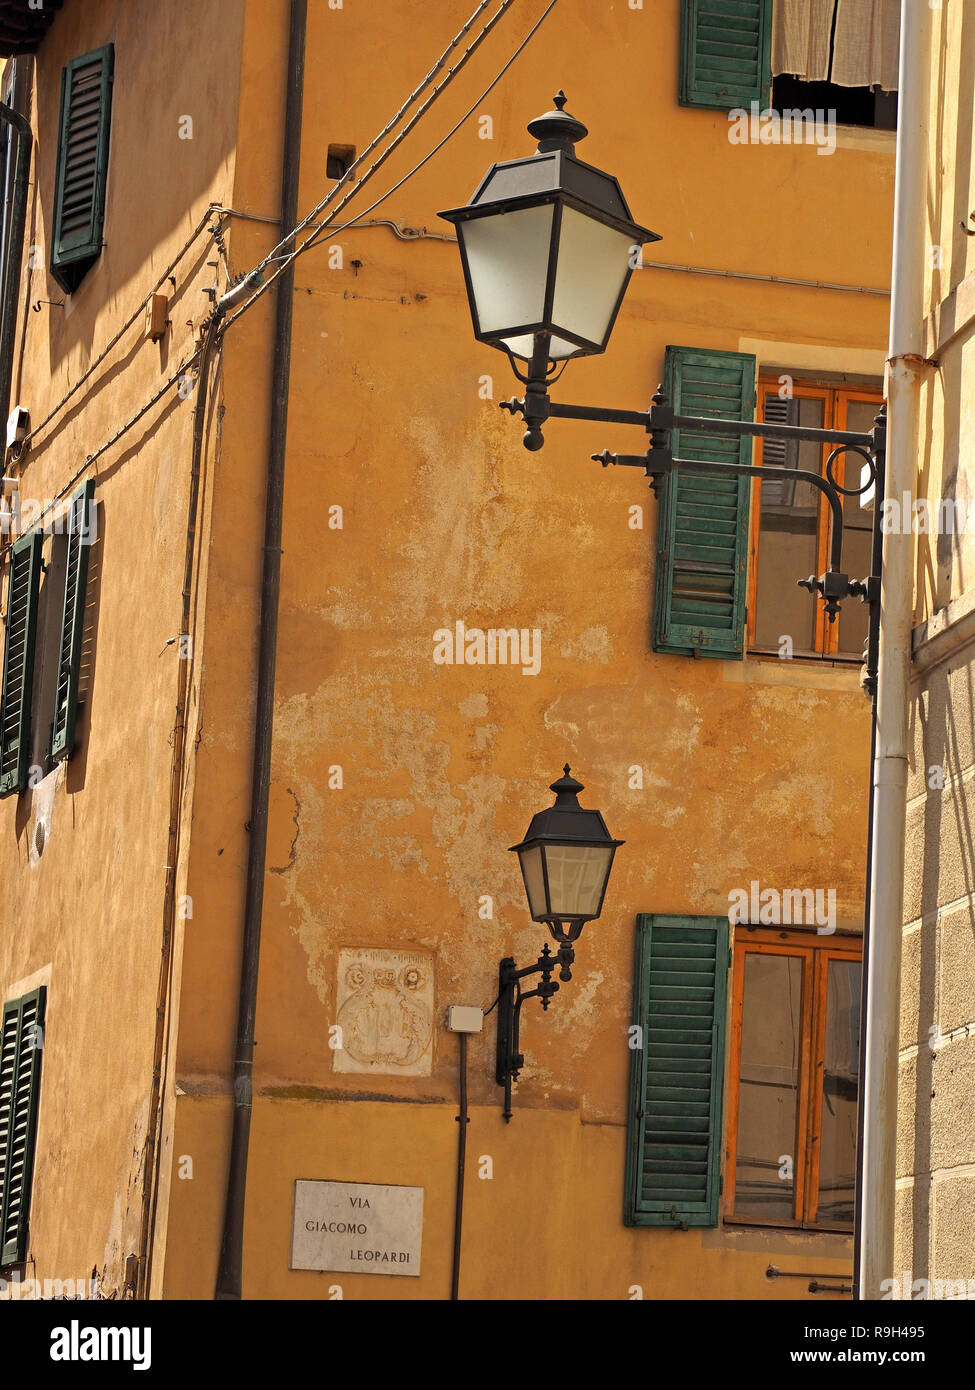 luminous lantern style street lights on iron brackets shine in sunlight against typical ochre buildings & green shuttered windows in Pisa, Italy Stock Photo